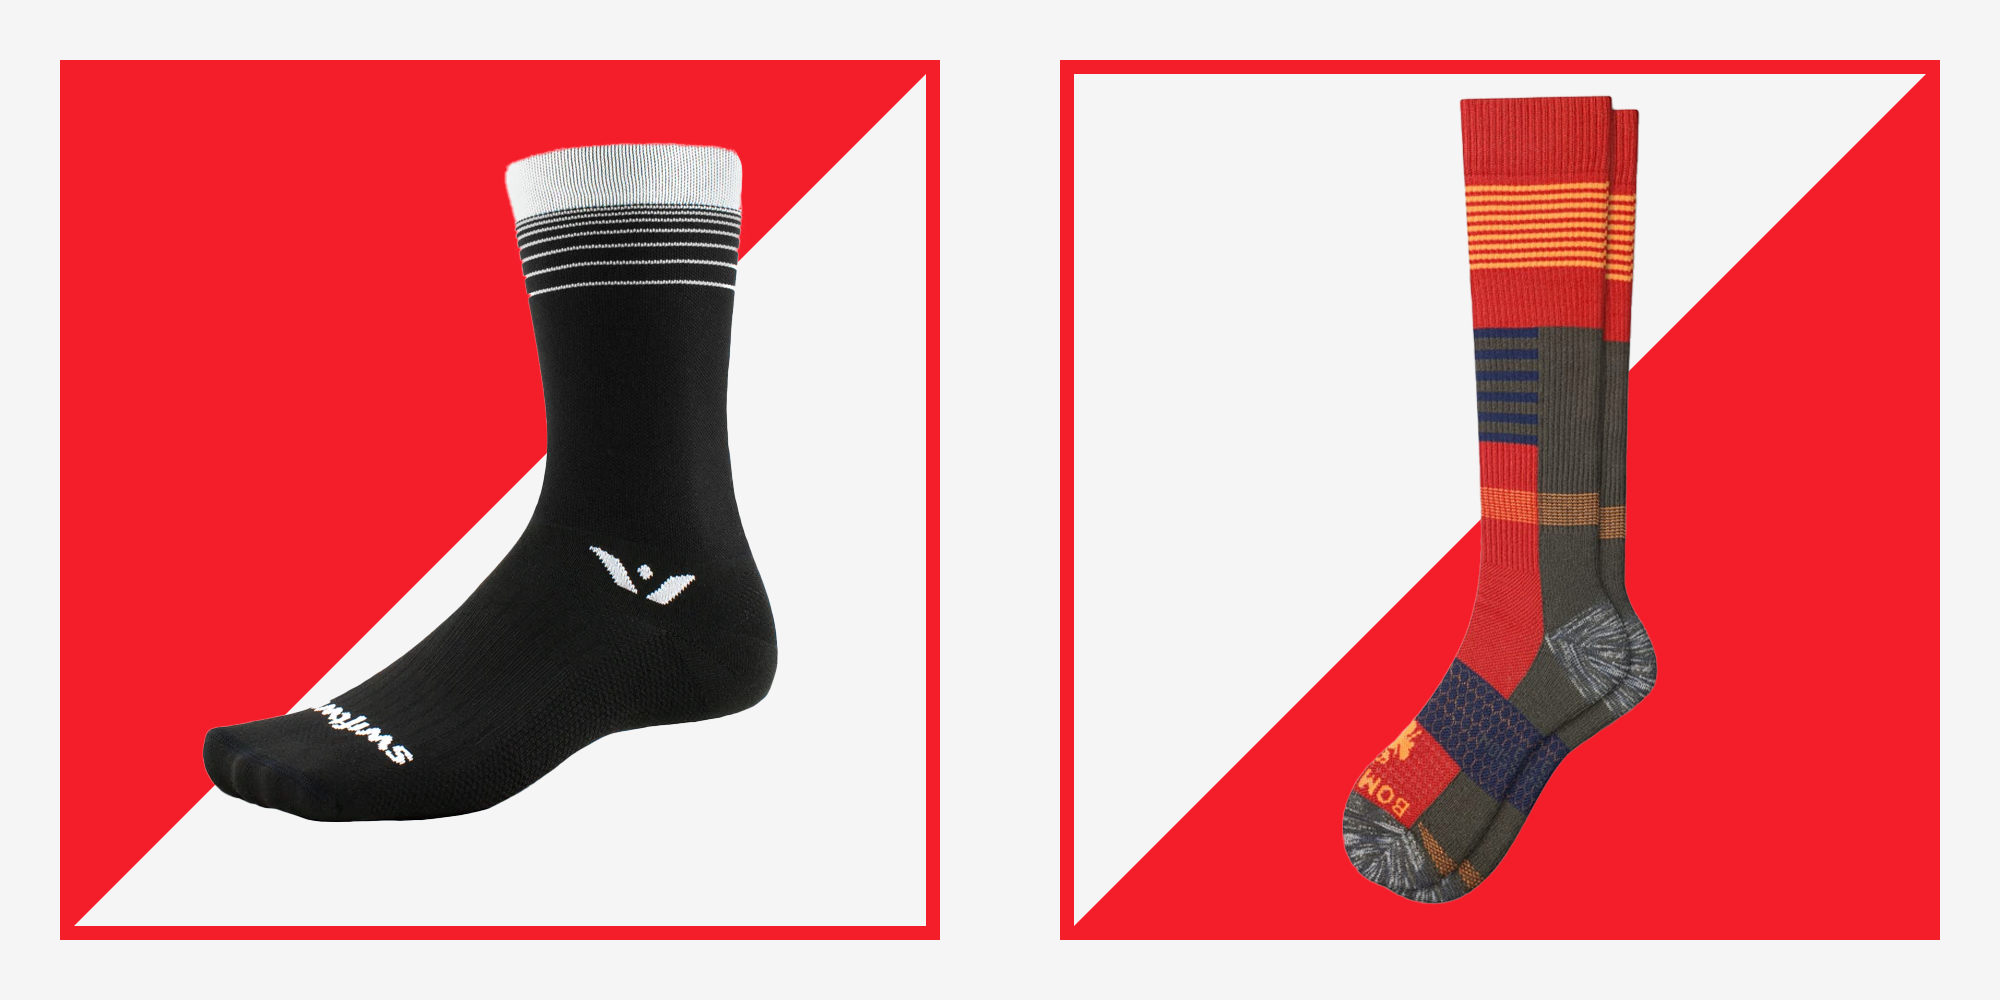 SOITEAM Colored Splashes All Over The Soccer Polyester Cotton Socks,Compression Socks for Women&Men-Best for Running,Funky Socks for Men,Stylish and Eye-Catching Party Socks. 